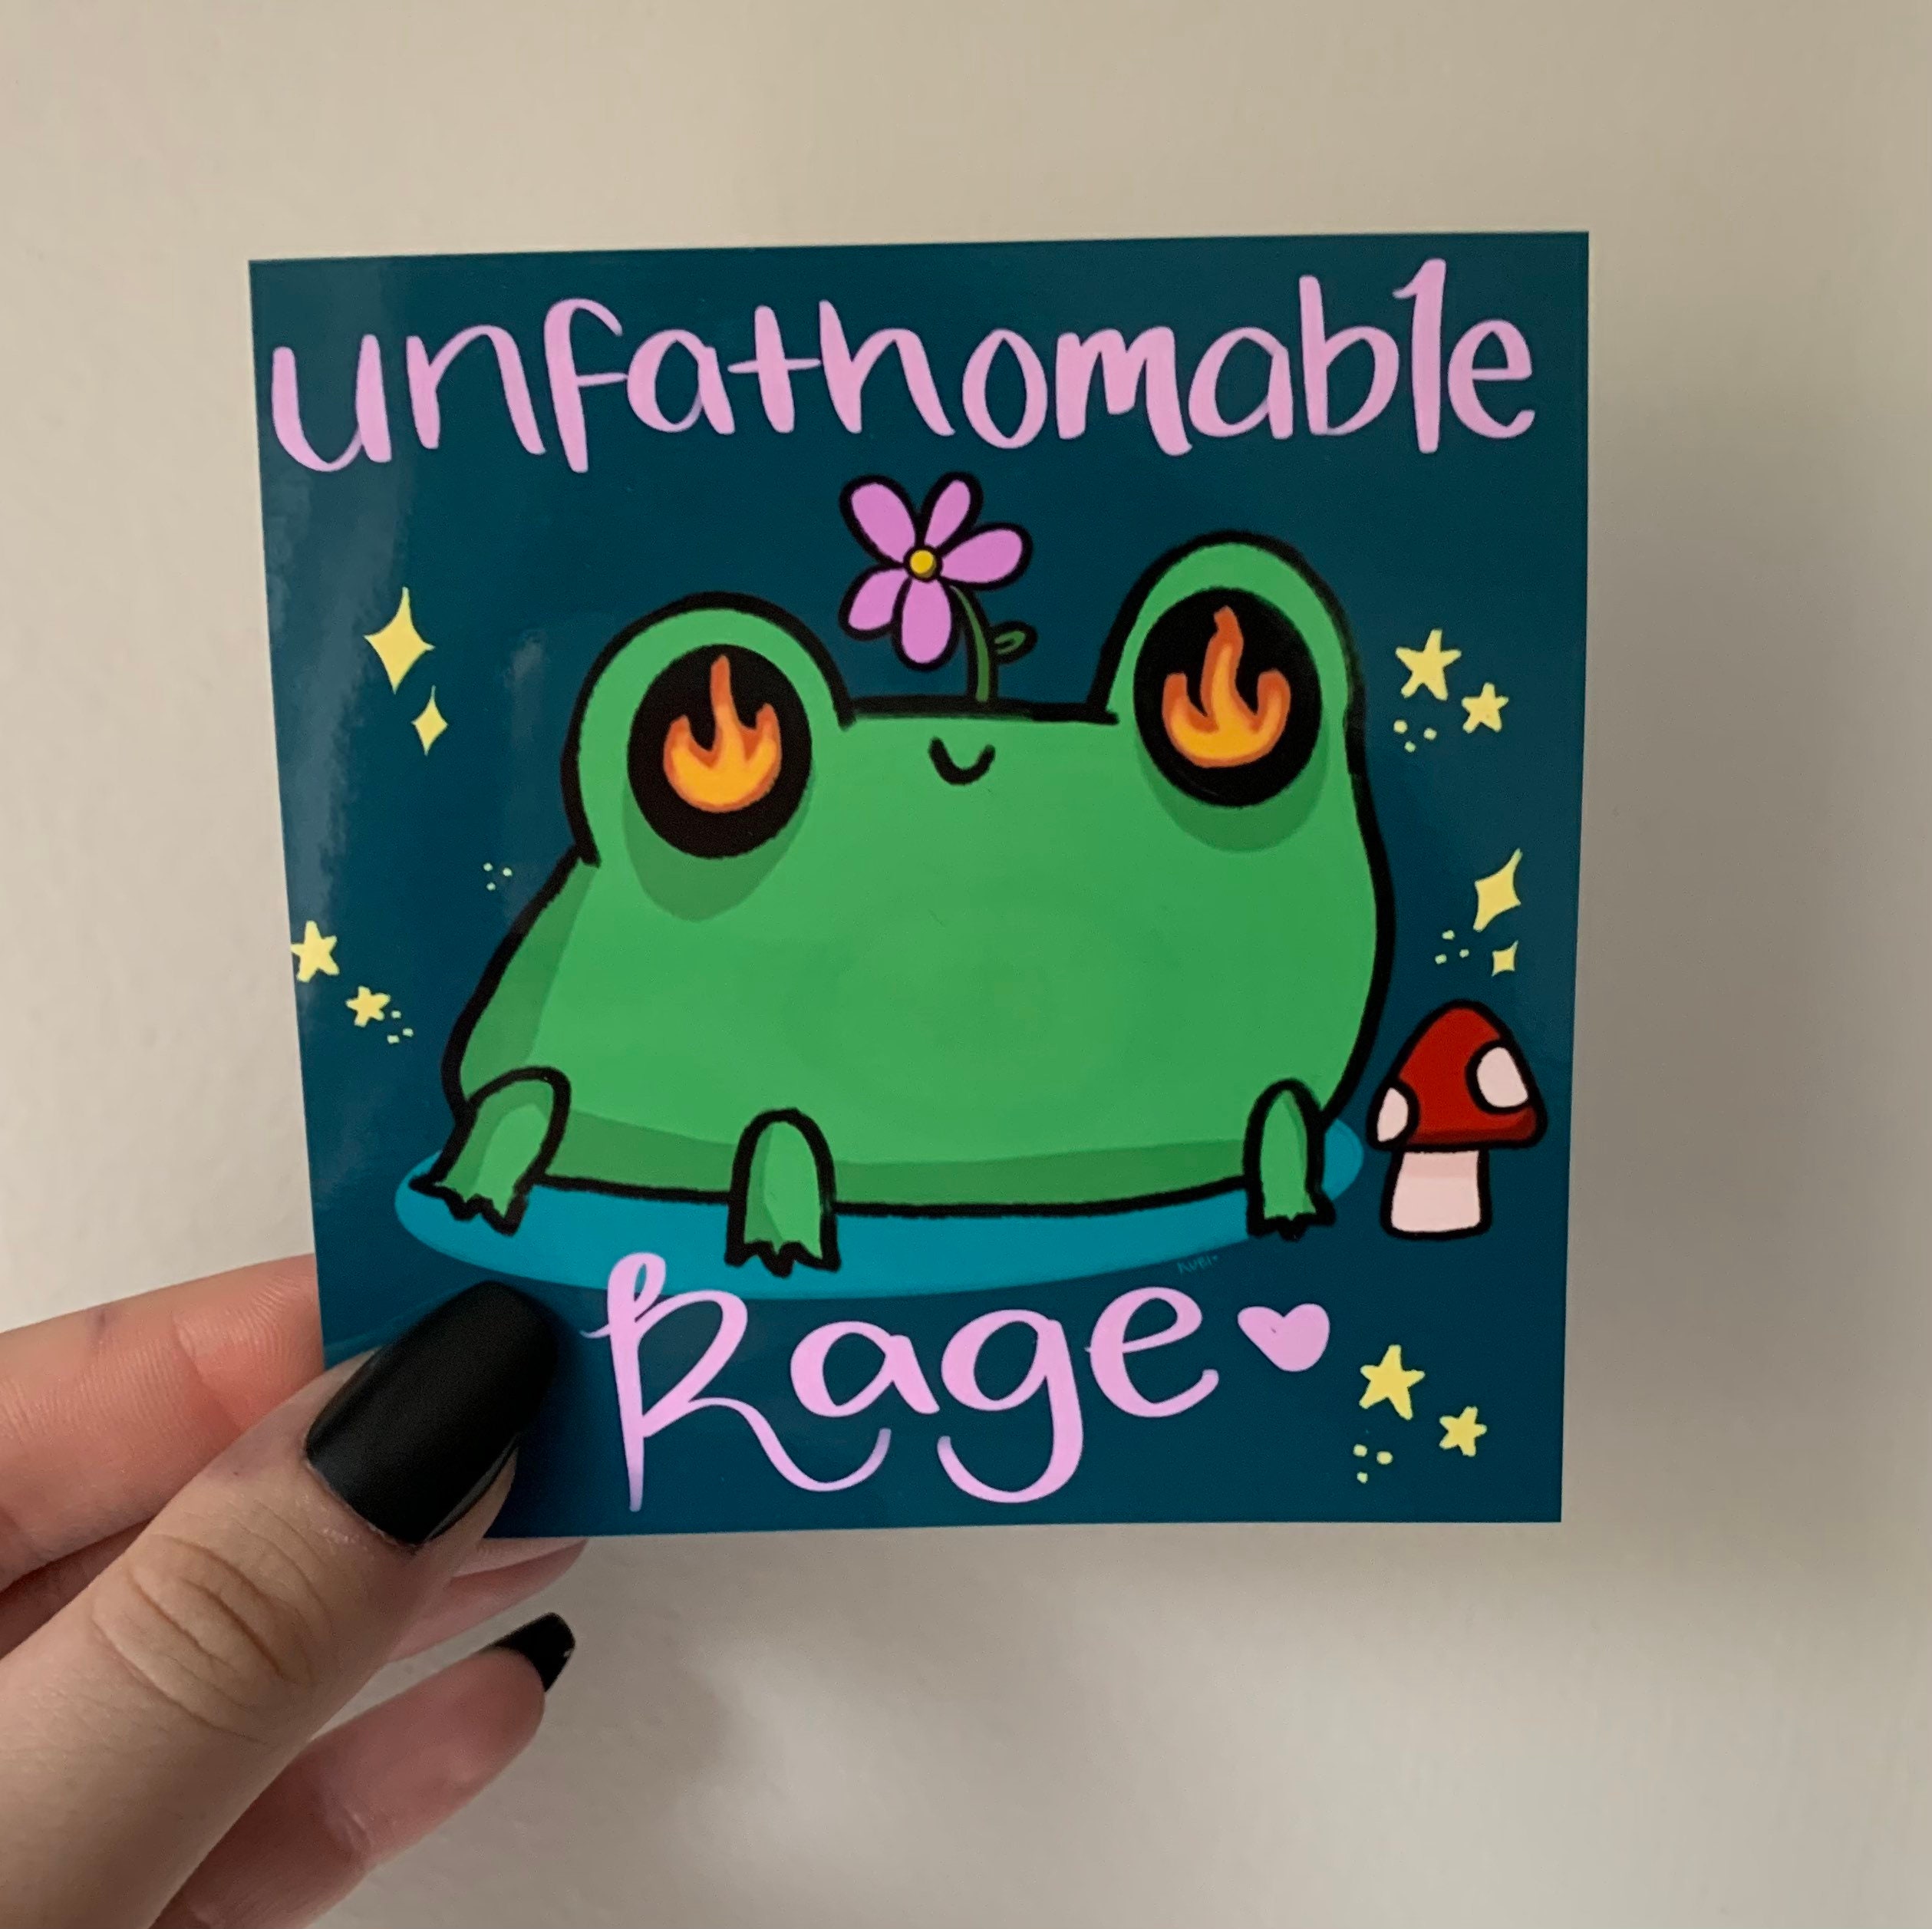 Cheeky Frog Sticker, Booty Sticker, Booty Frog, Frog Sticker, Cute Frog